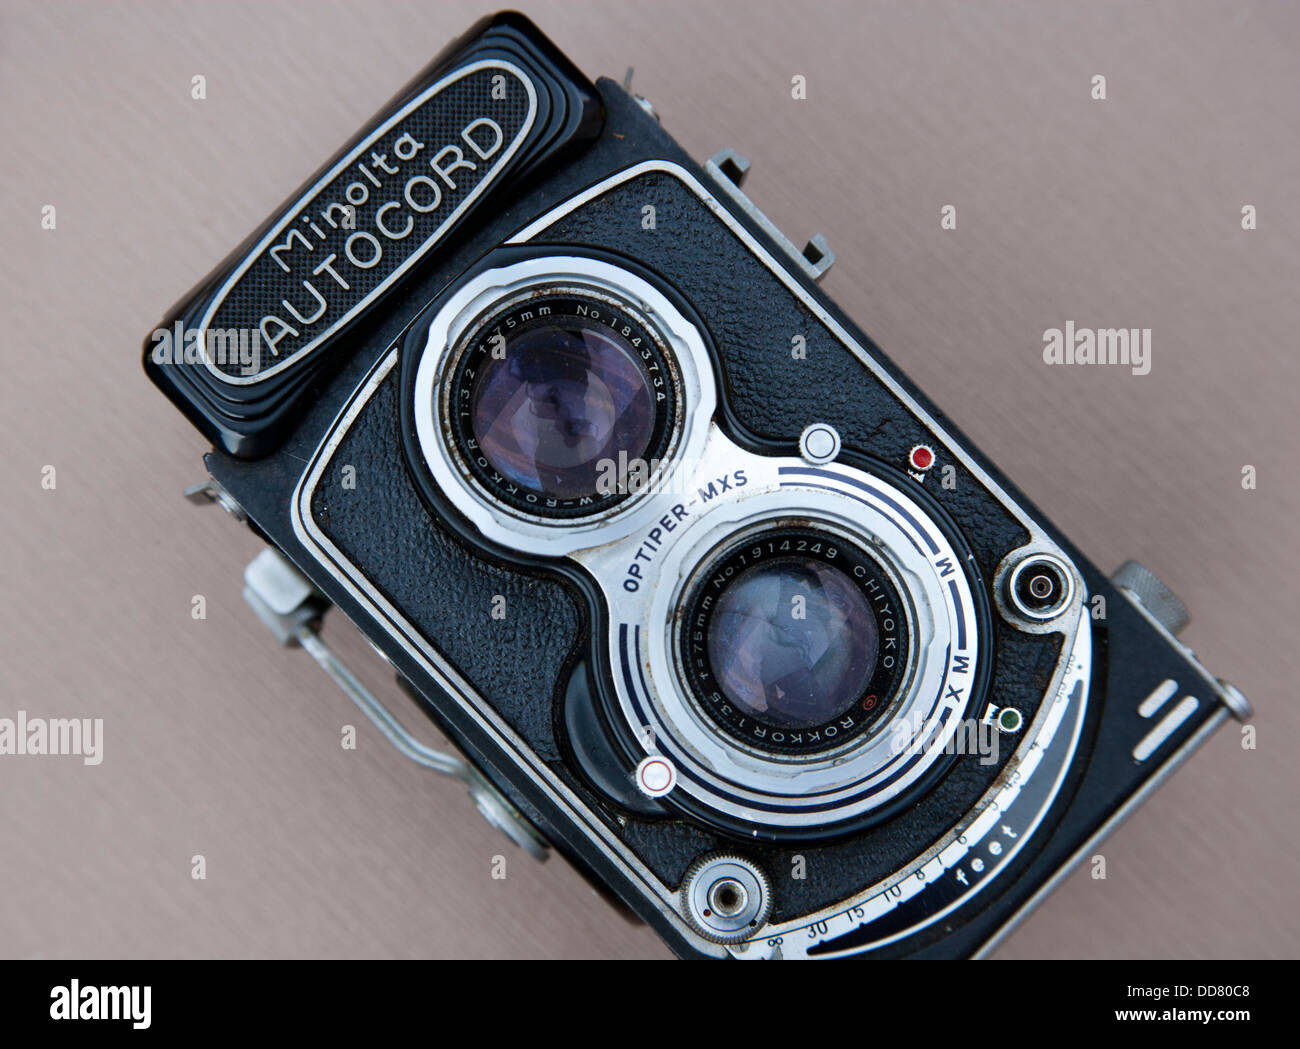 Minolta autocord fotocamera Foto Stock